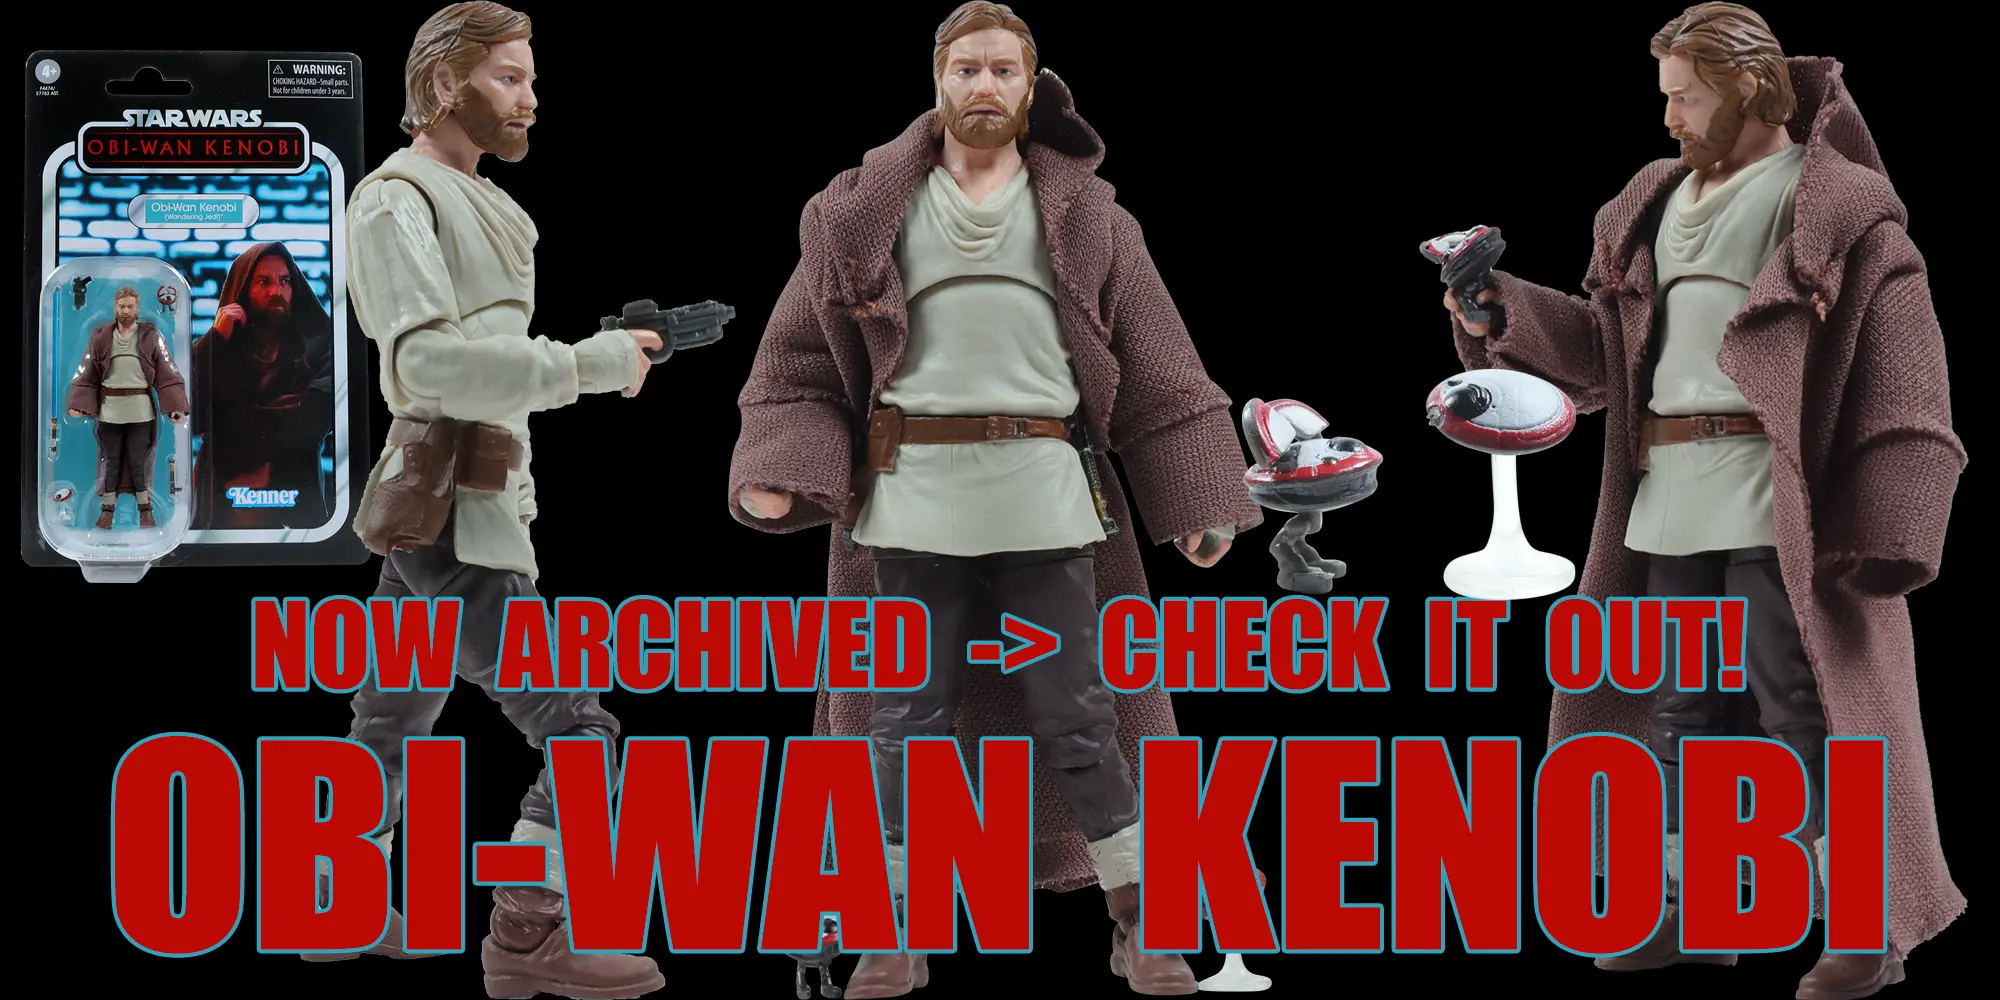 Obi-Wan Kenobi And L0-LA59 Archived